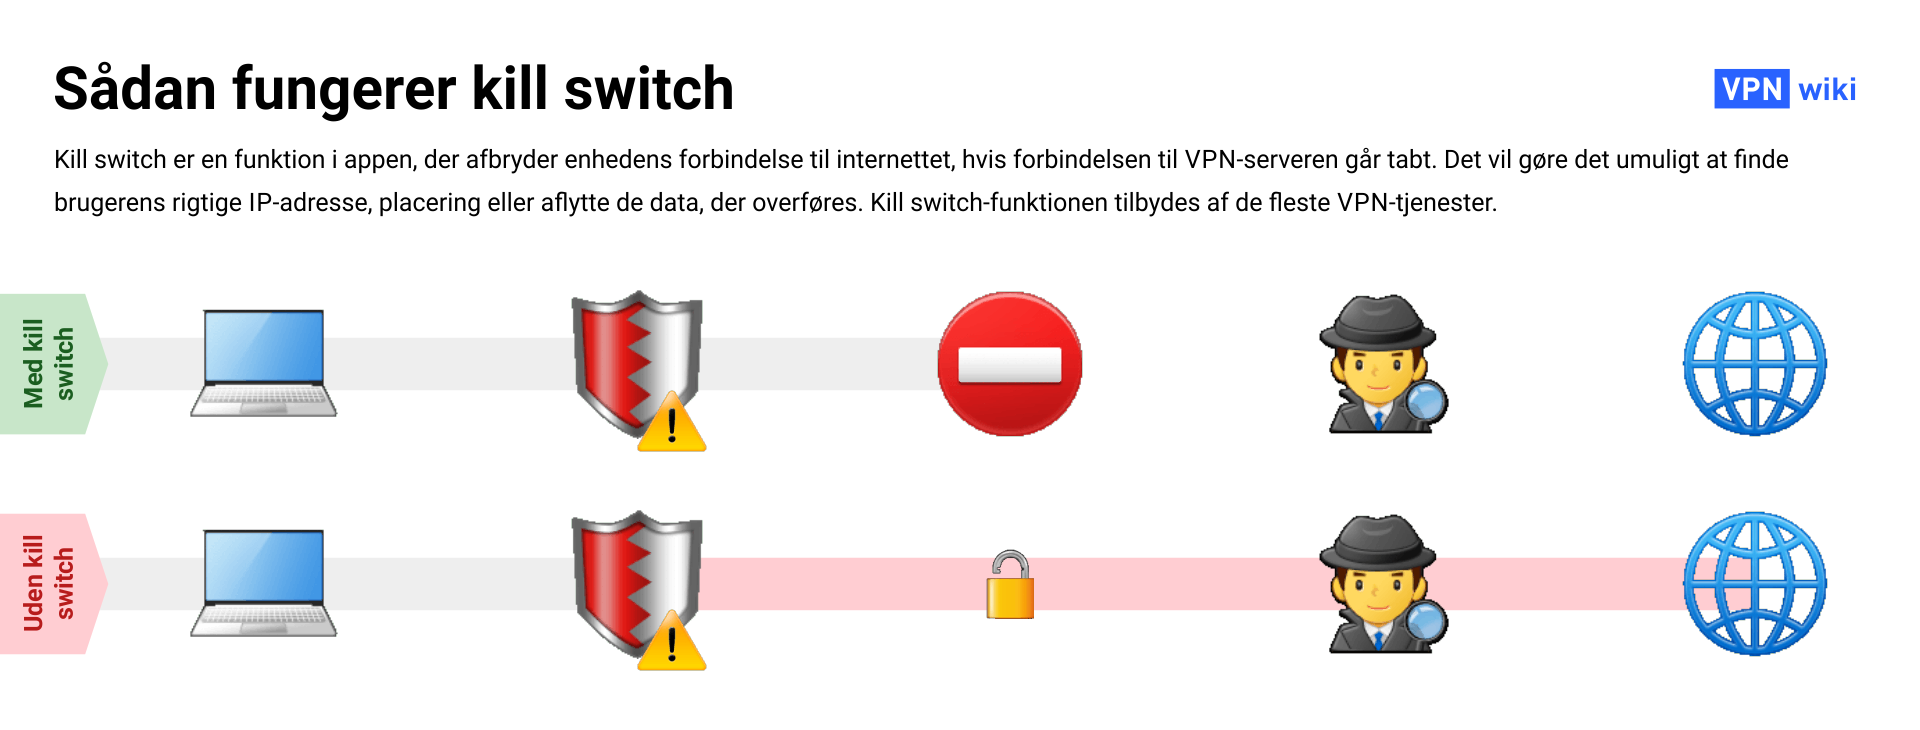 Hvad er en VPN kill switch, og hvordan virker den?